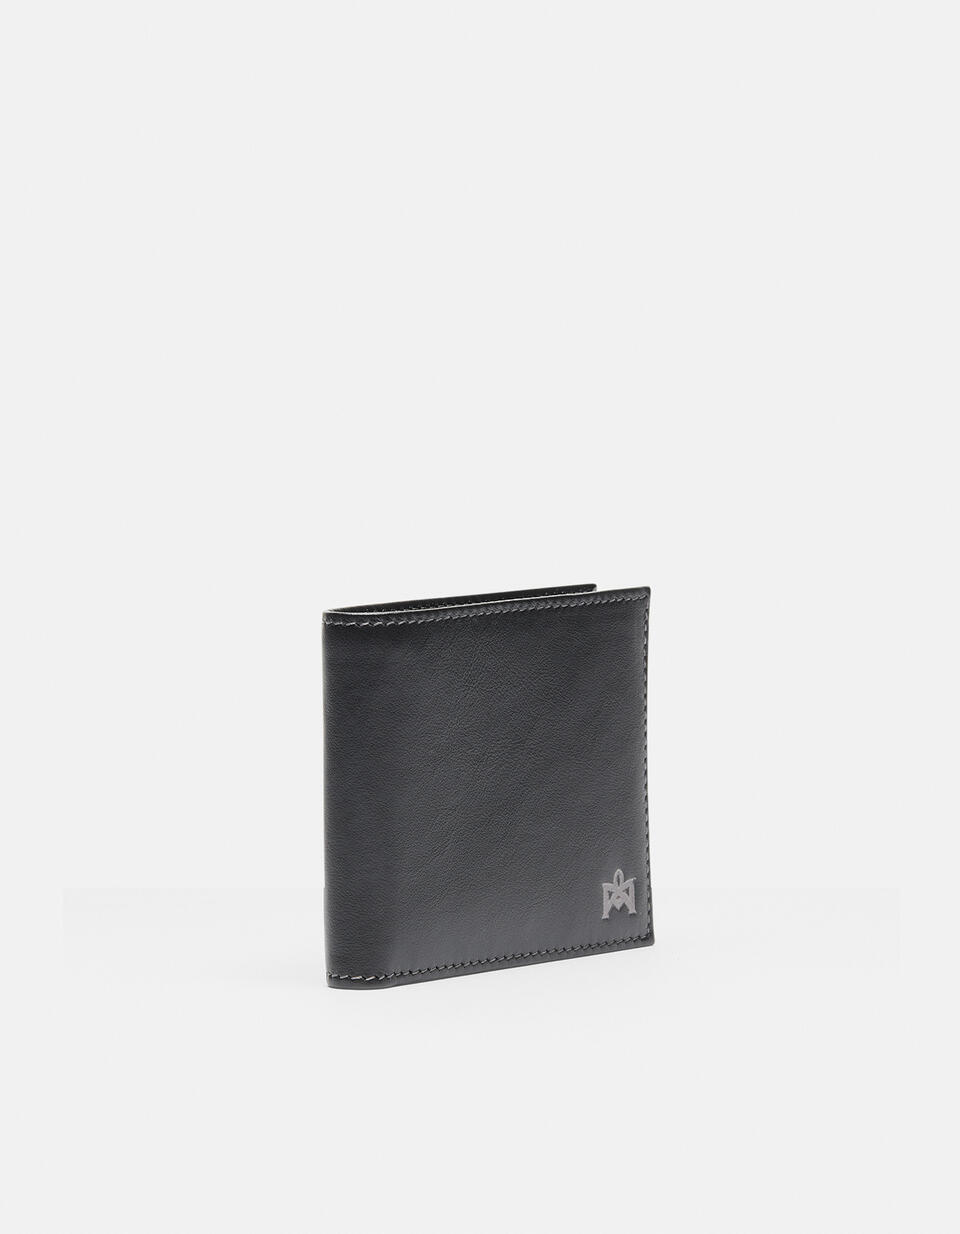 Adam  basic wallet - Women's Wallets - Men's Wallets | Wallets  - Women's Wallets - Men's Wallets | WalletsCuoieria Fiorentina